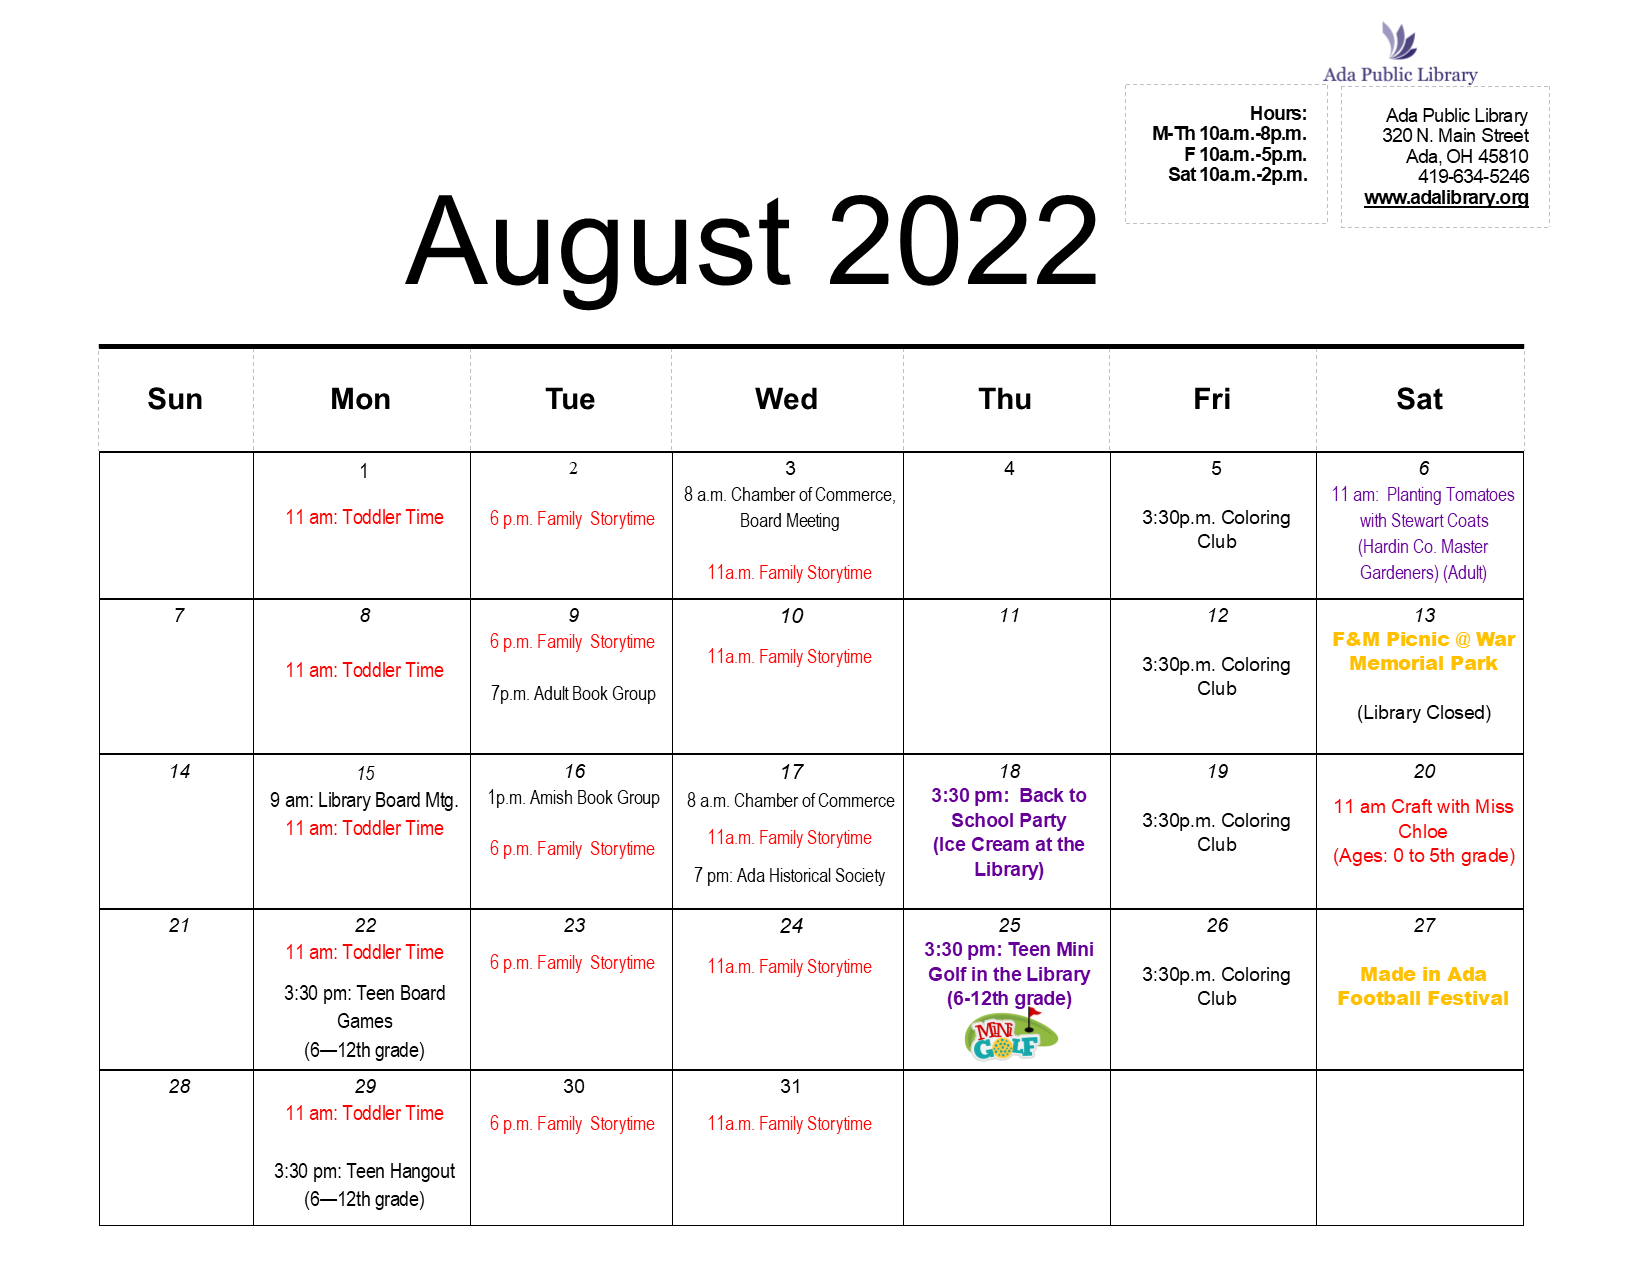 "August 2022 Calendar of Activities"